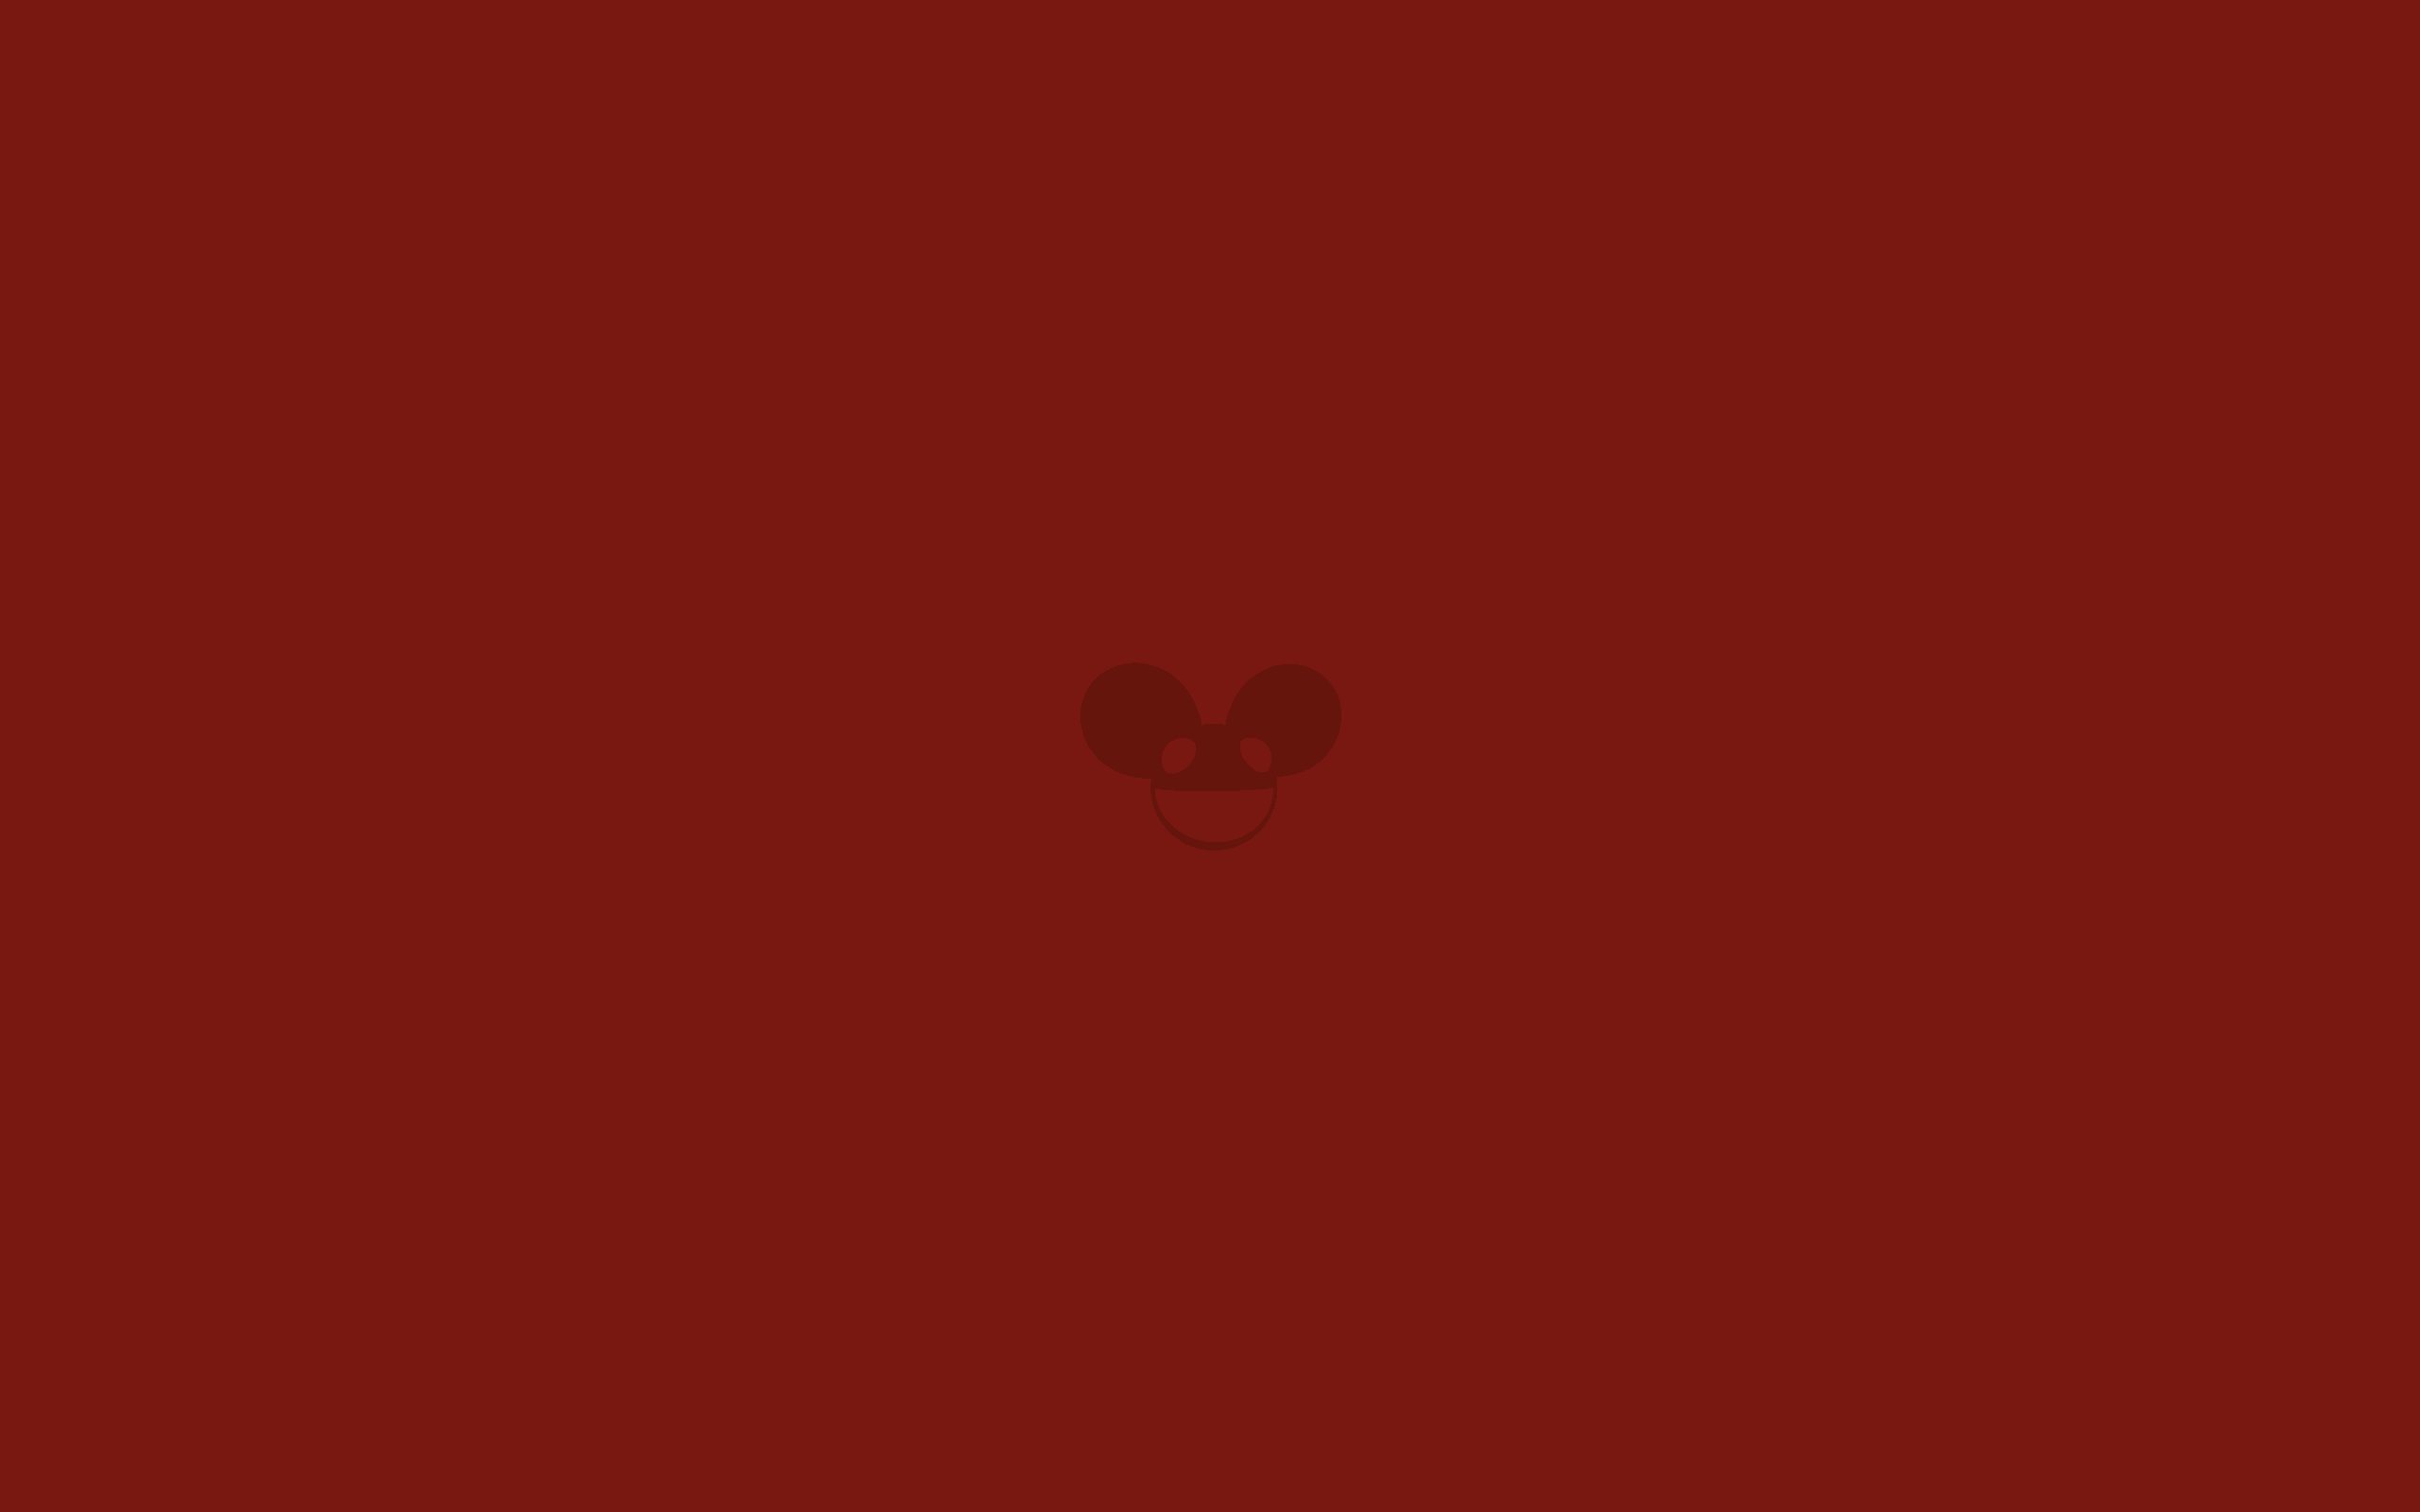 Deadmau5 Minimal Wallpaper Destkop Backgrounddestkop Background